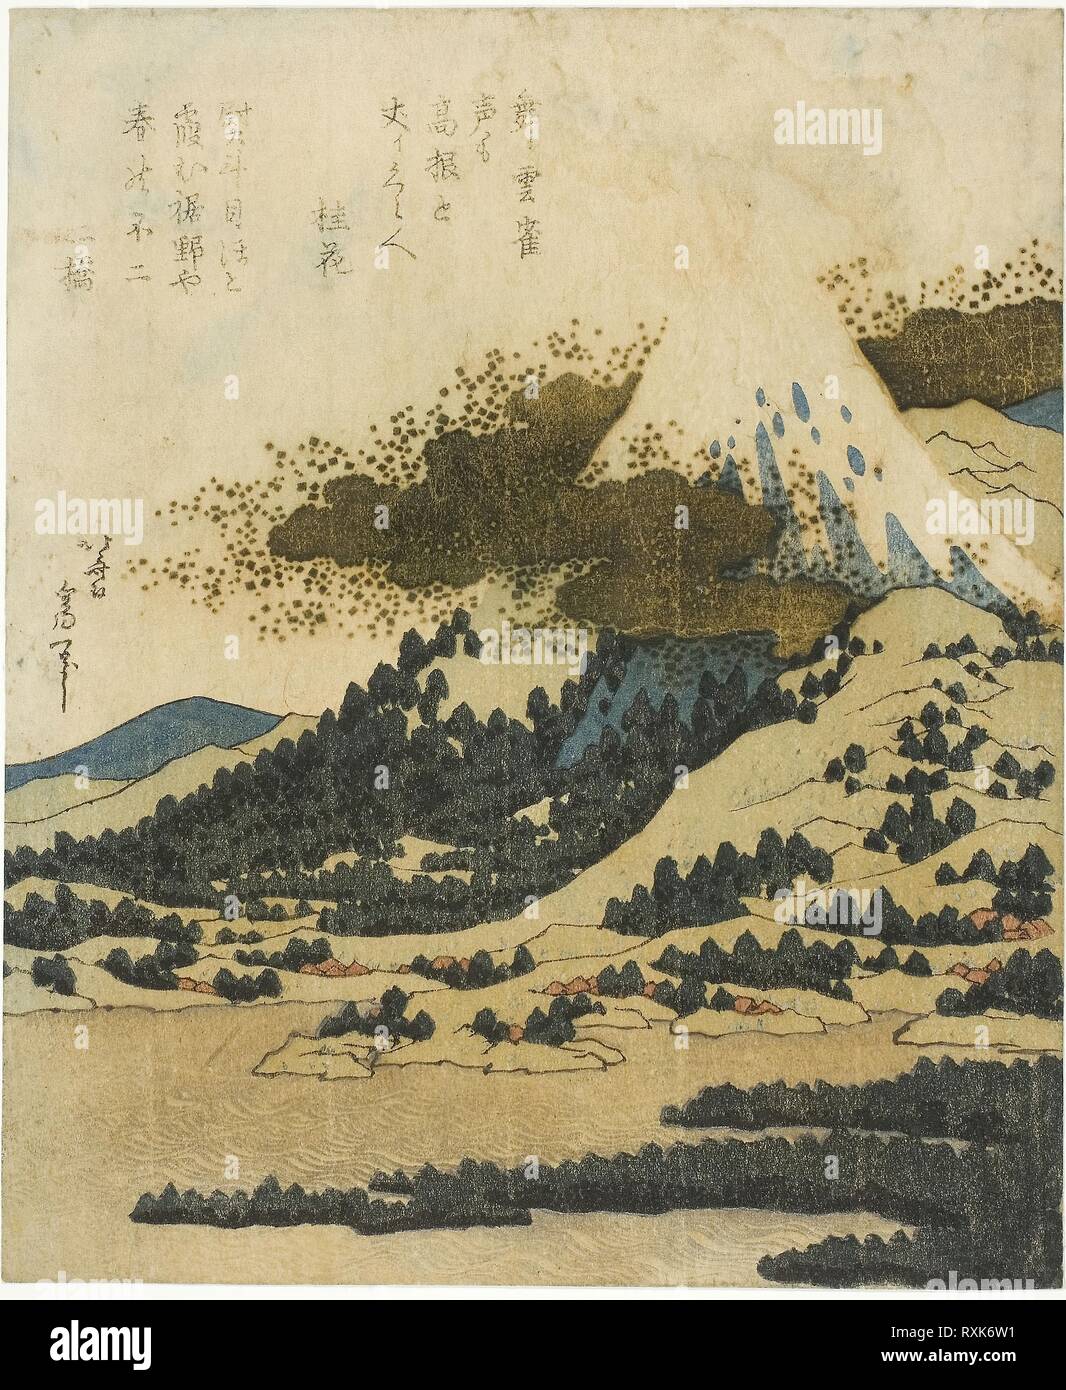 Mount Fuji from Lake Ashi in Hakone. Katsushika Hokusai ?? ??; Japanese, 1760-1849. Date: 1825-1840. Dimensions: 21.9 x 18.2 cm. Color woodblock prints with metallic pigments; shikishiban, surimono. Origin: Japan. Museum: The Chicago Art Institute. Stock Photo